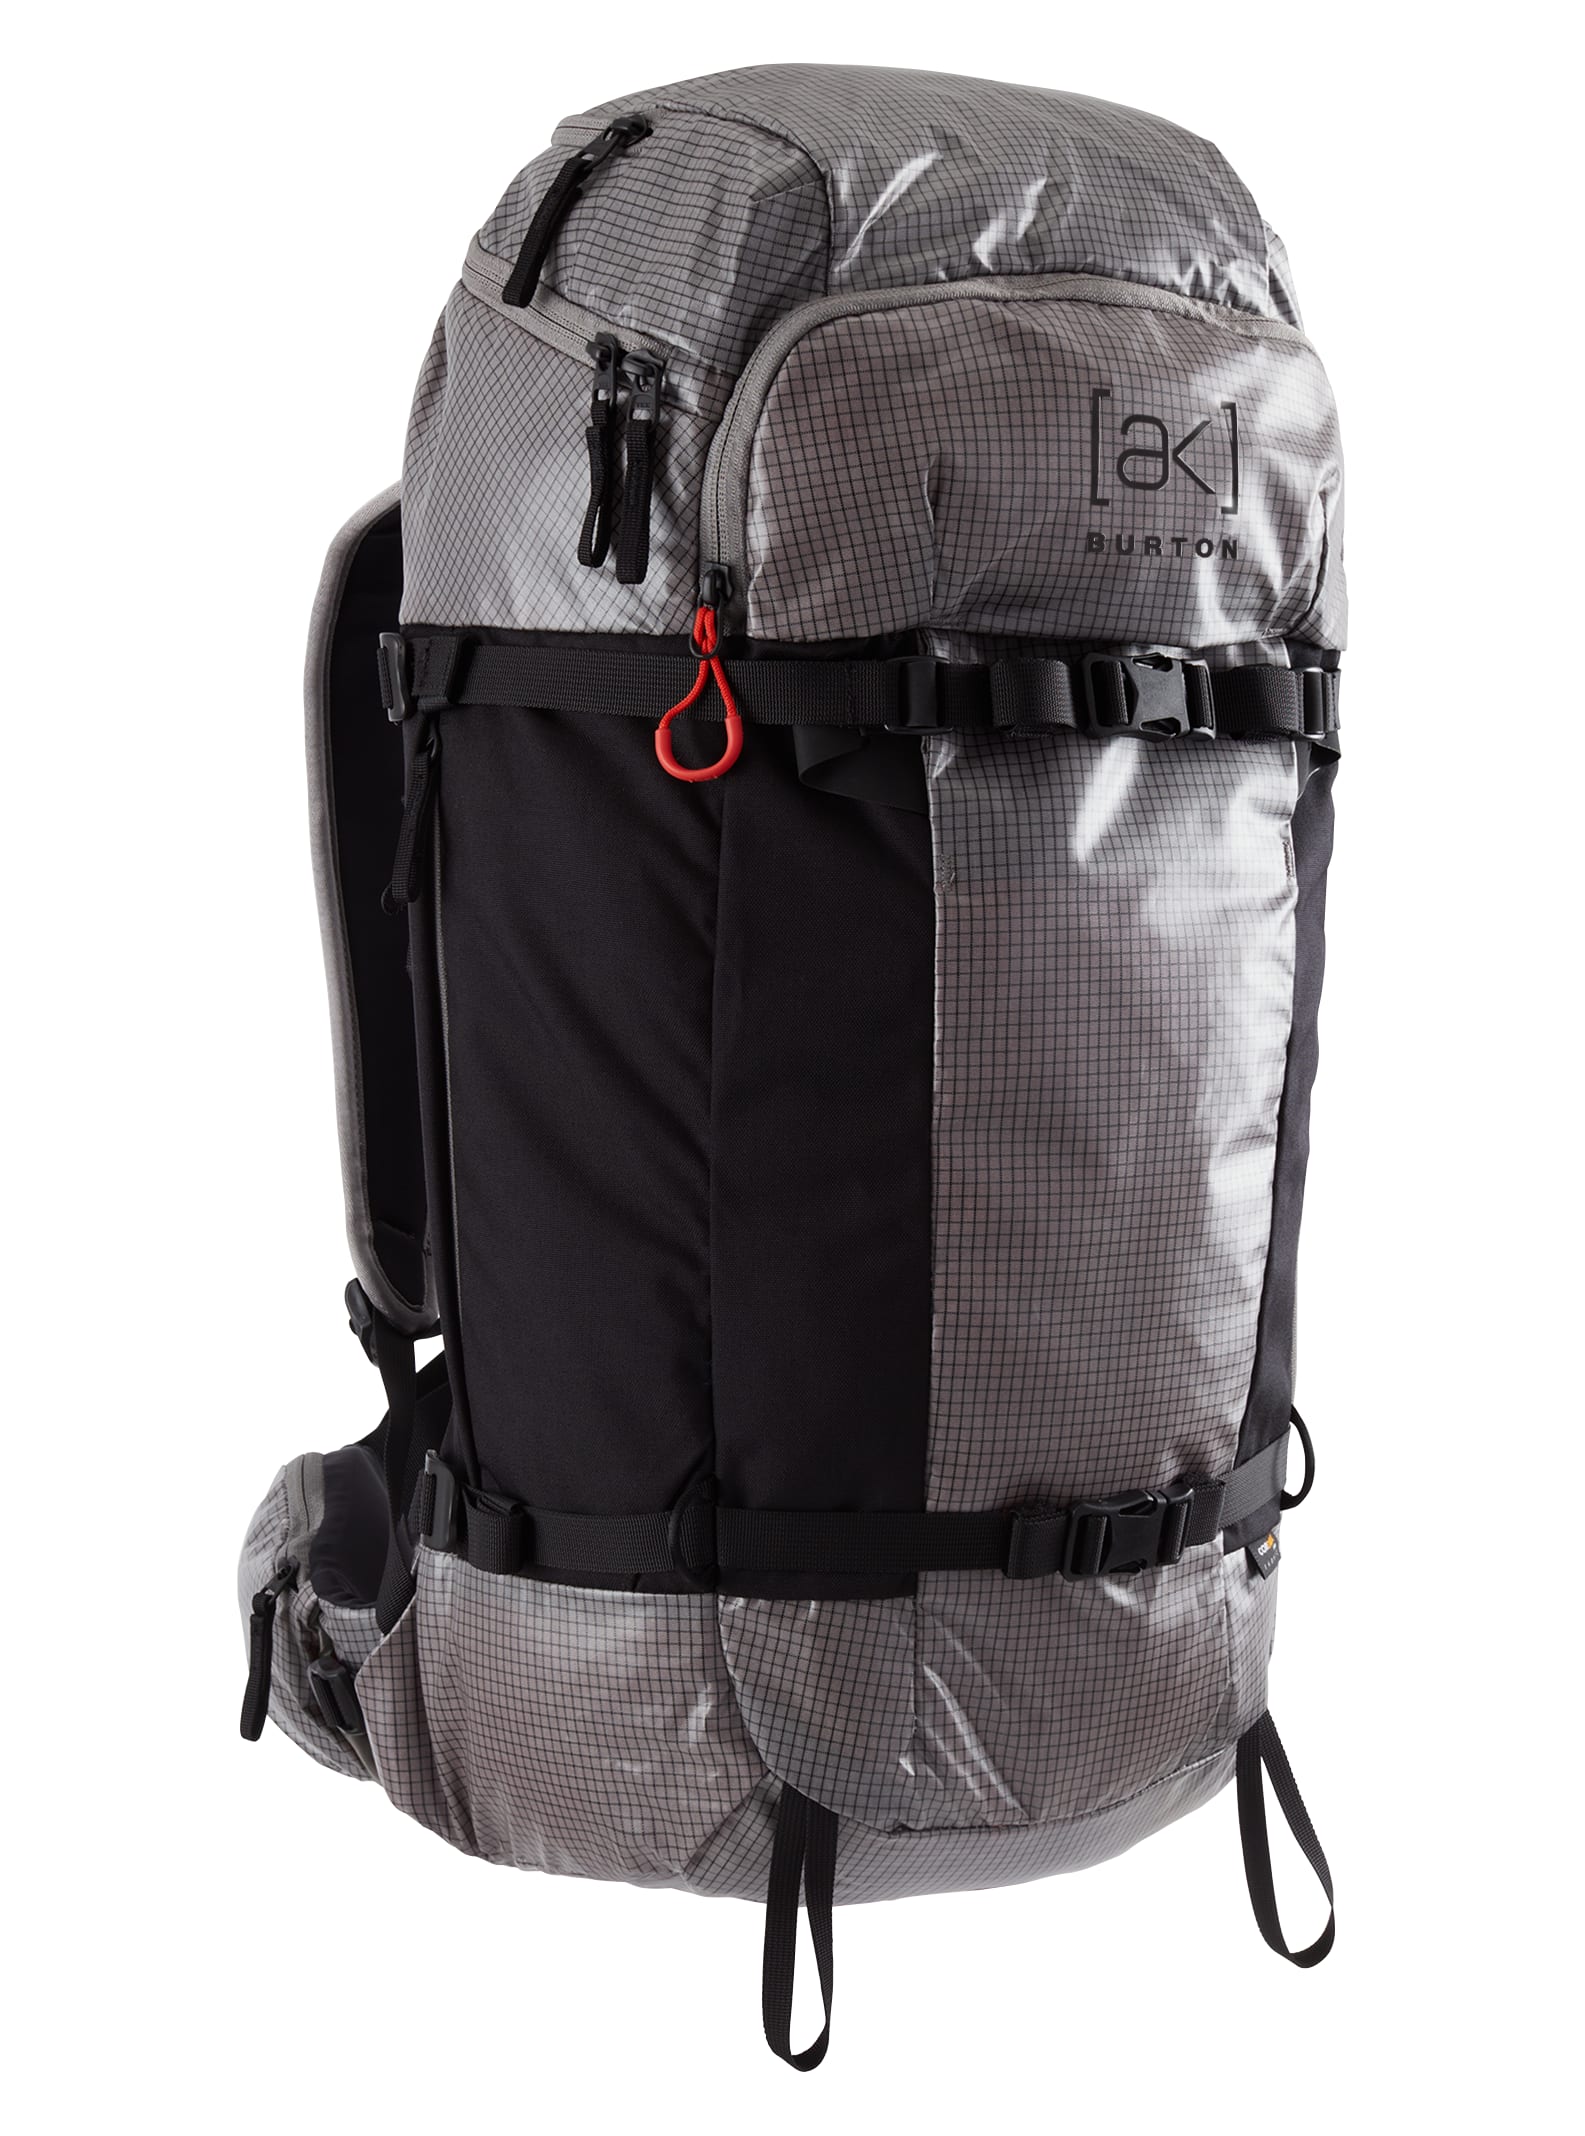 ak] Dispatcher 35L Backpack | Burton.com Winter 2023 US